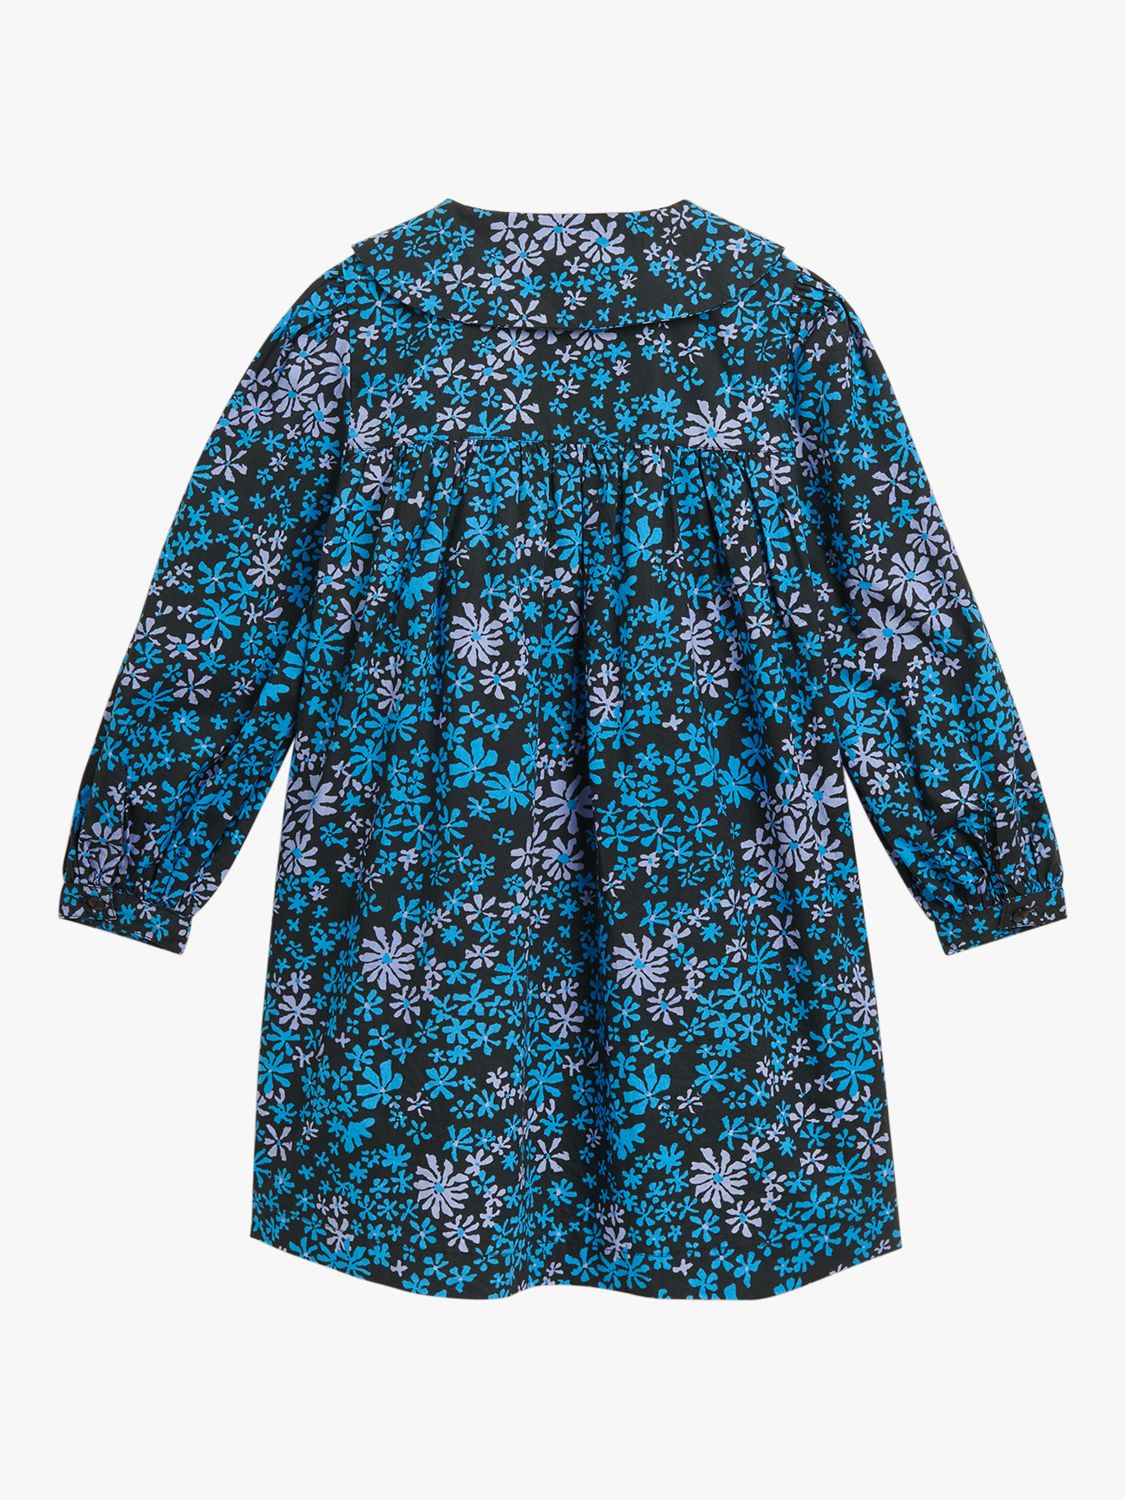 Whistles Kids' Sofia Boho Floral Print Dress, Blue/Multi, 3-4 years